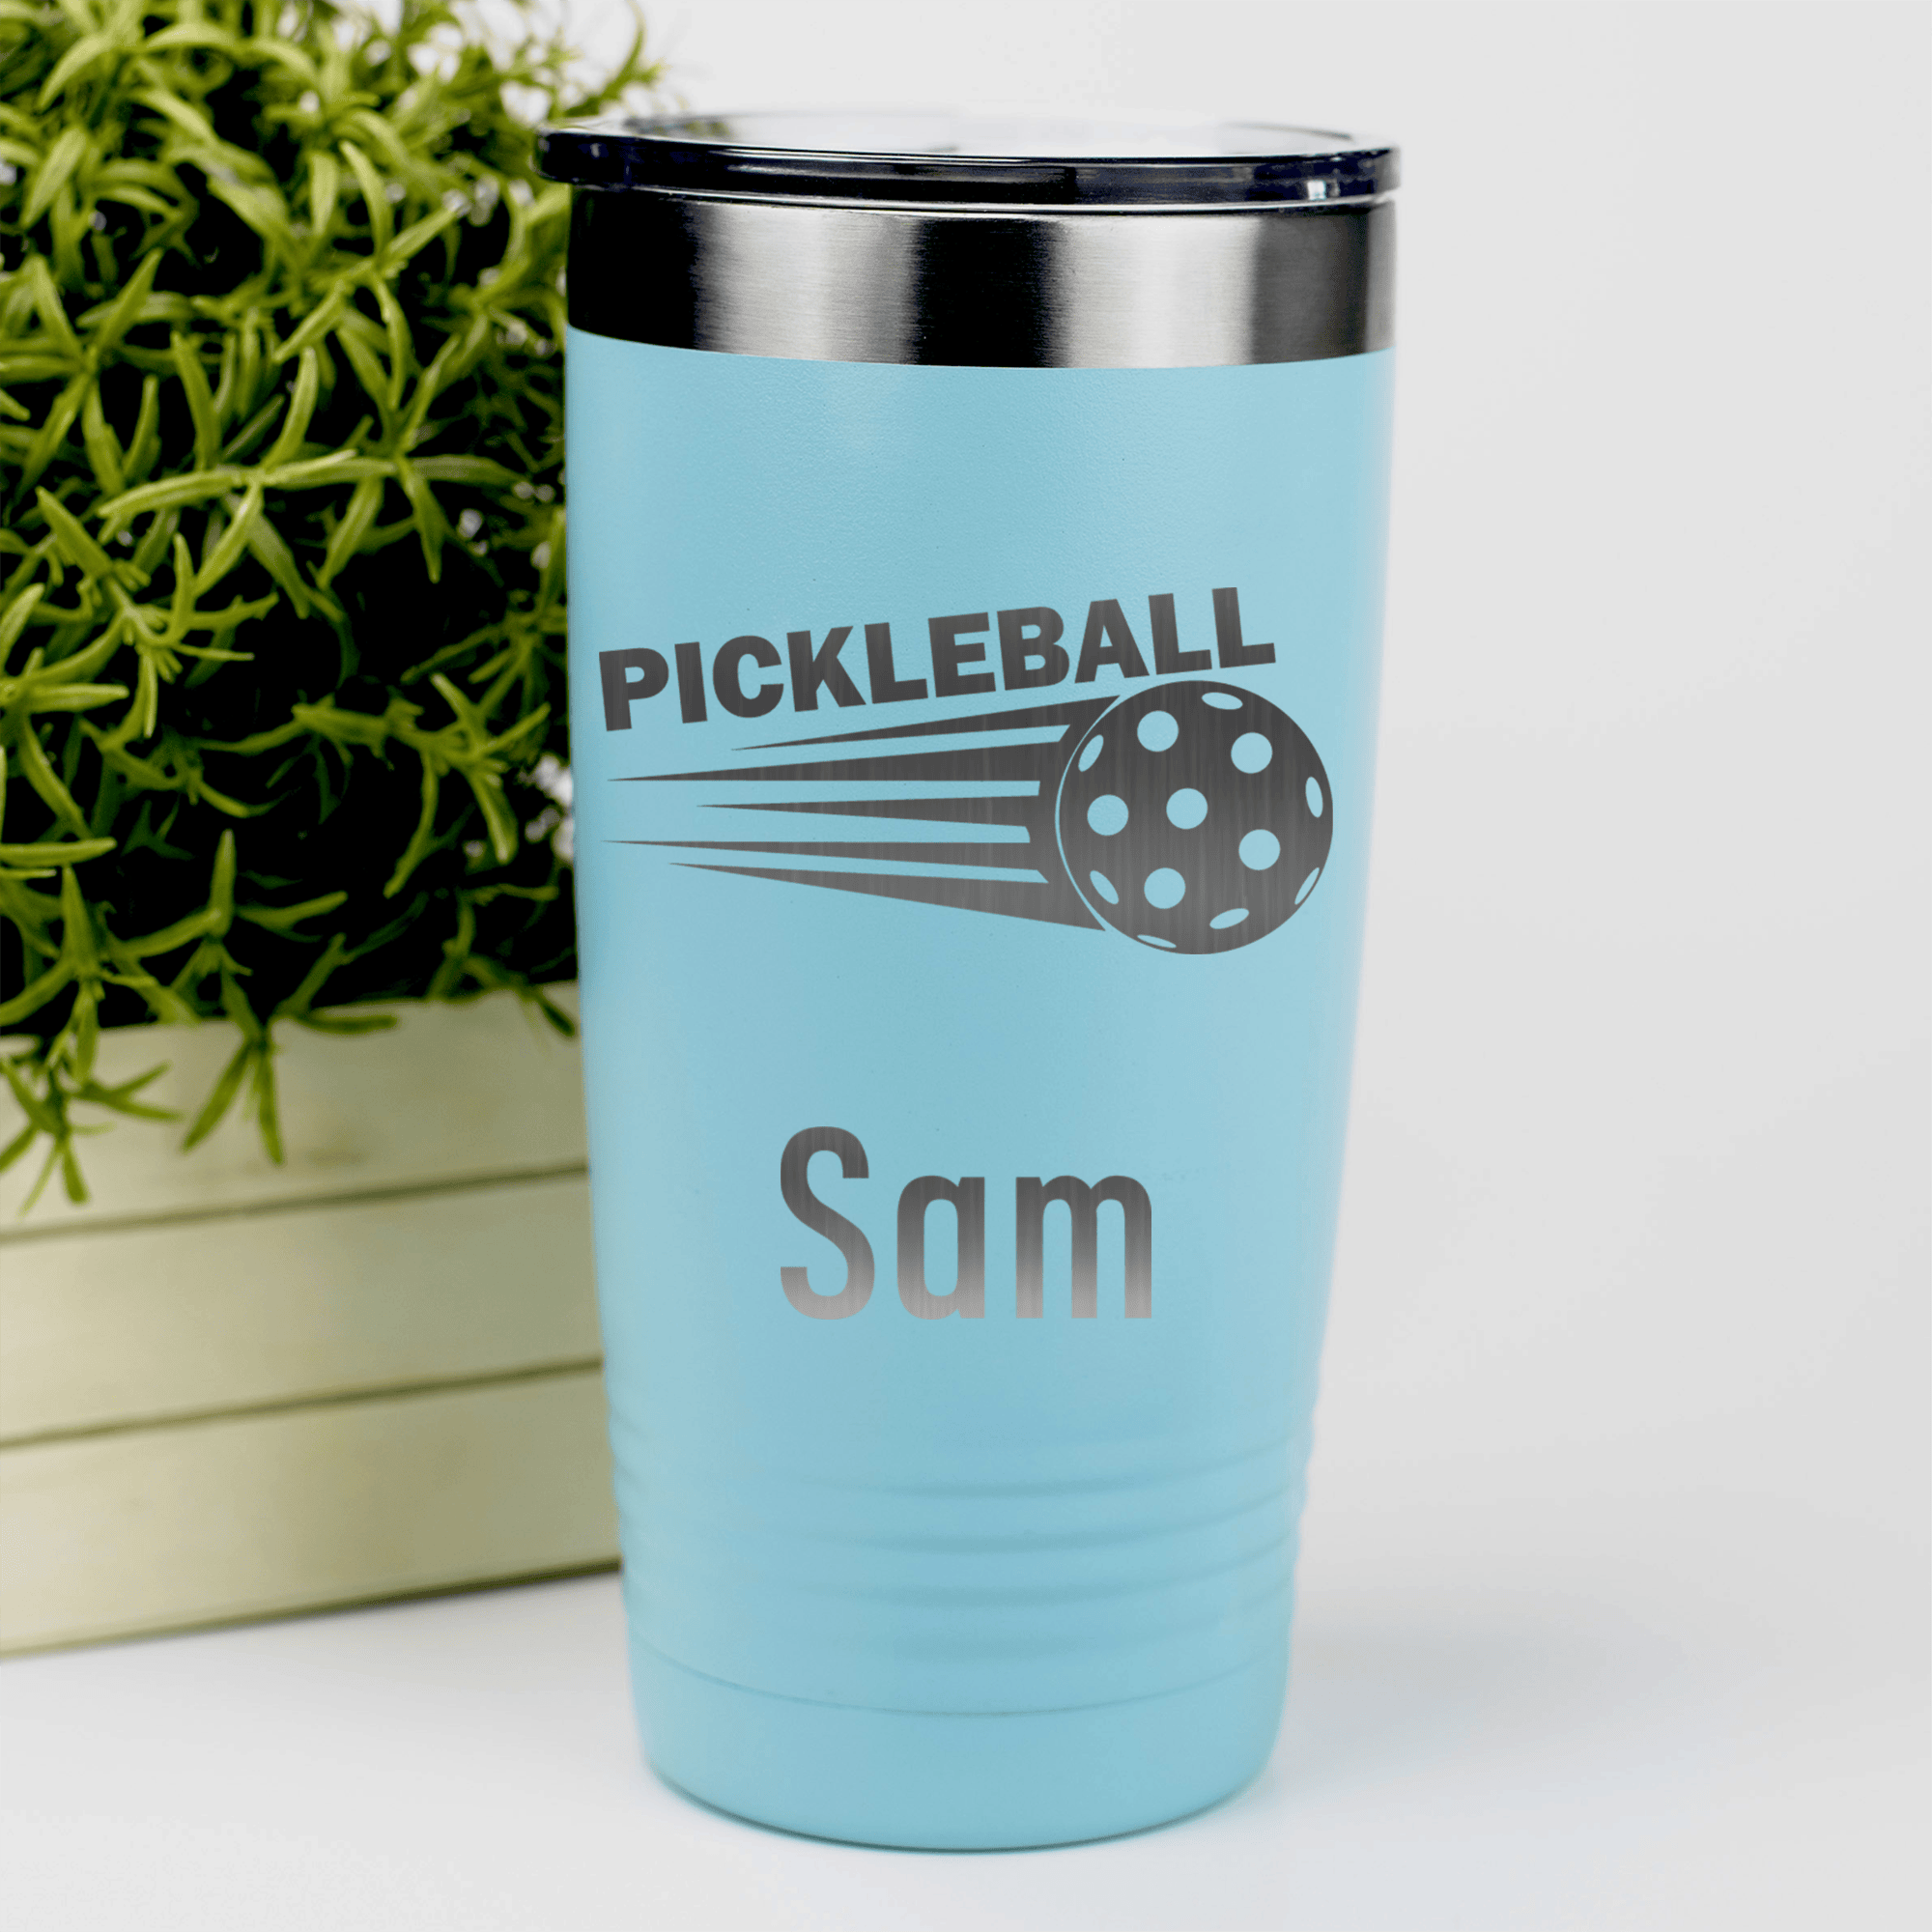 Teal Pickleball Tumbler With Pickle Sport Design